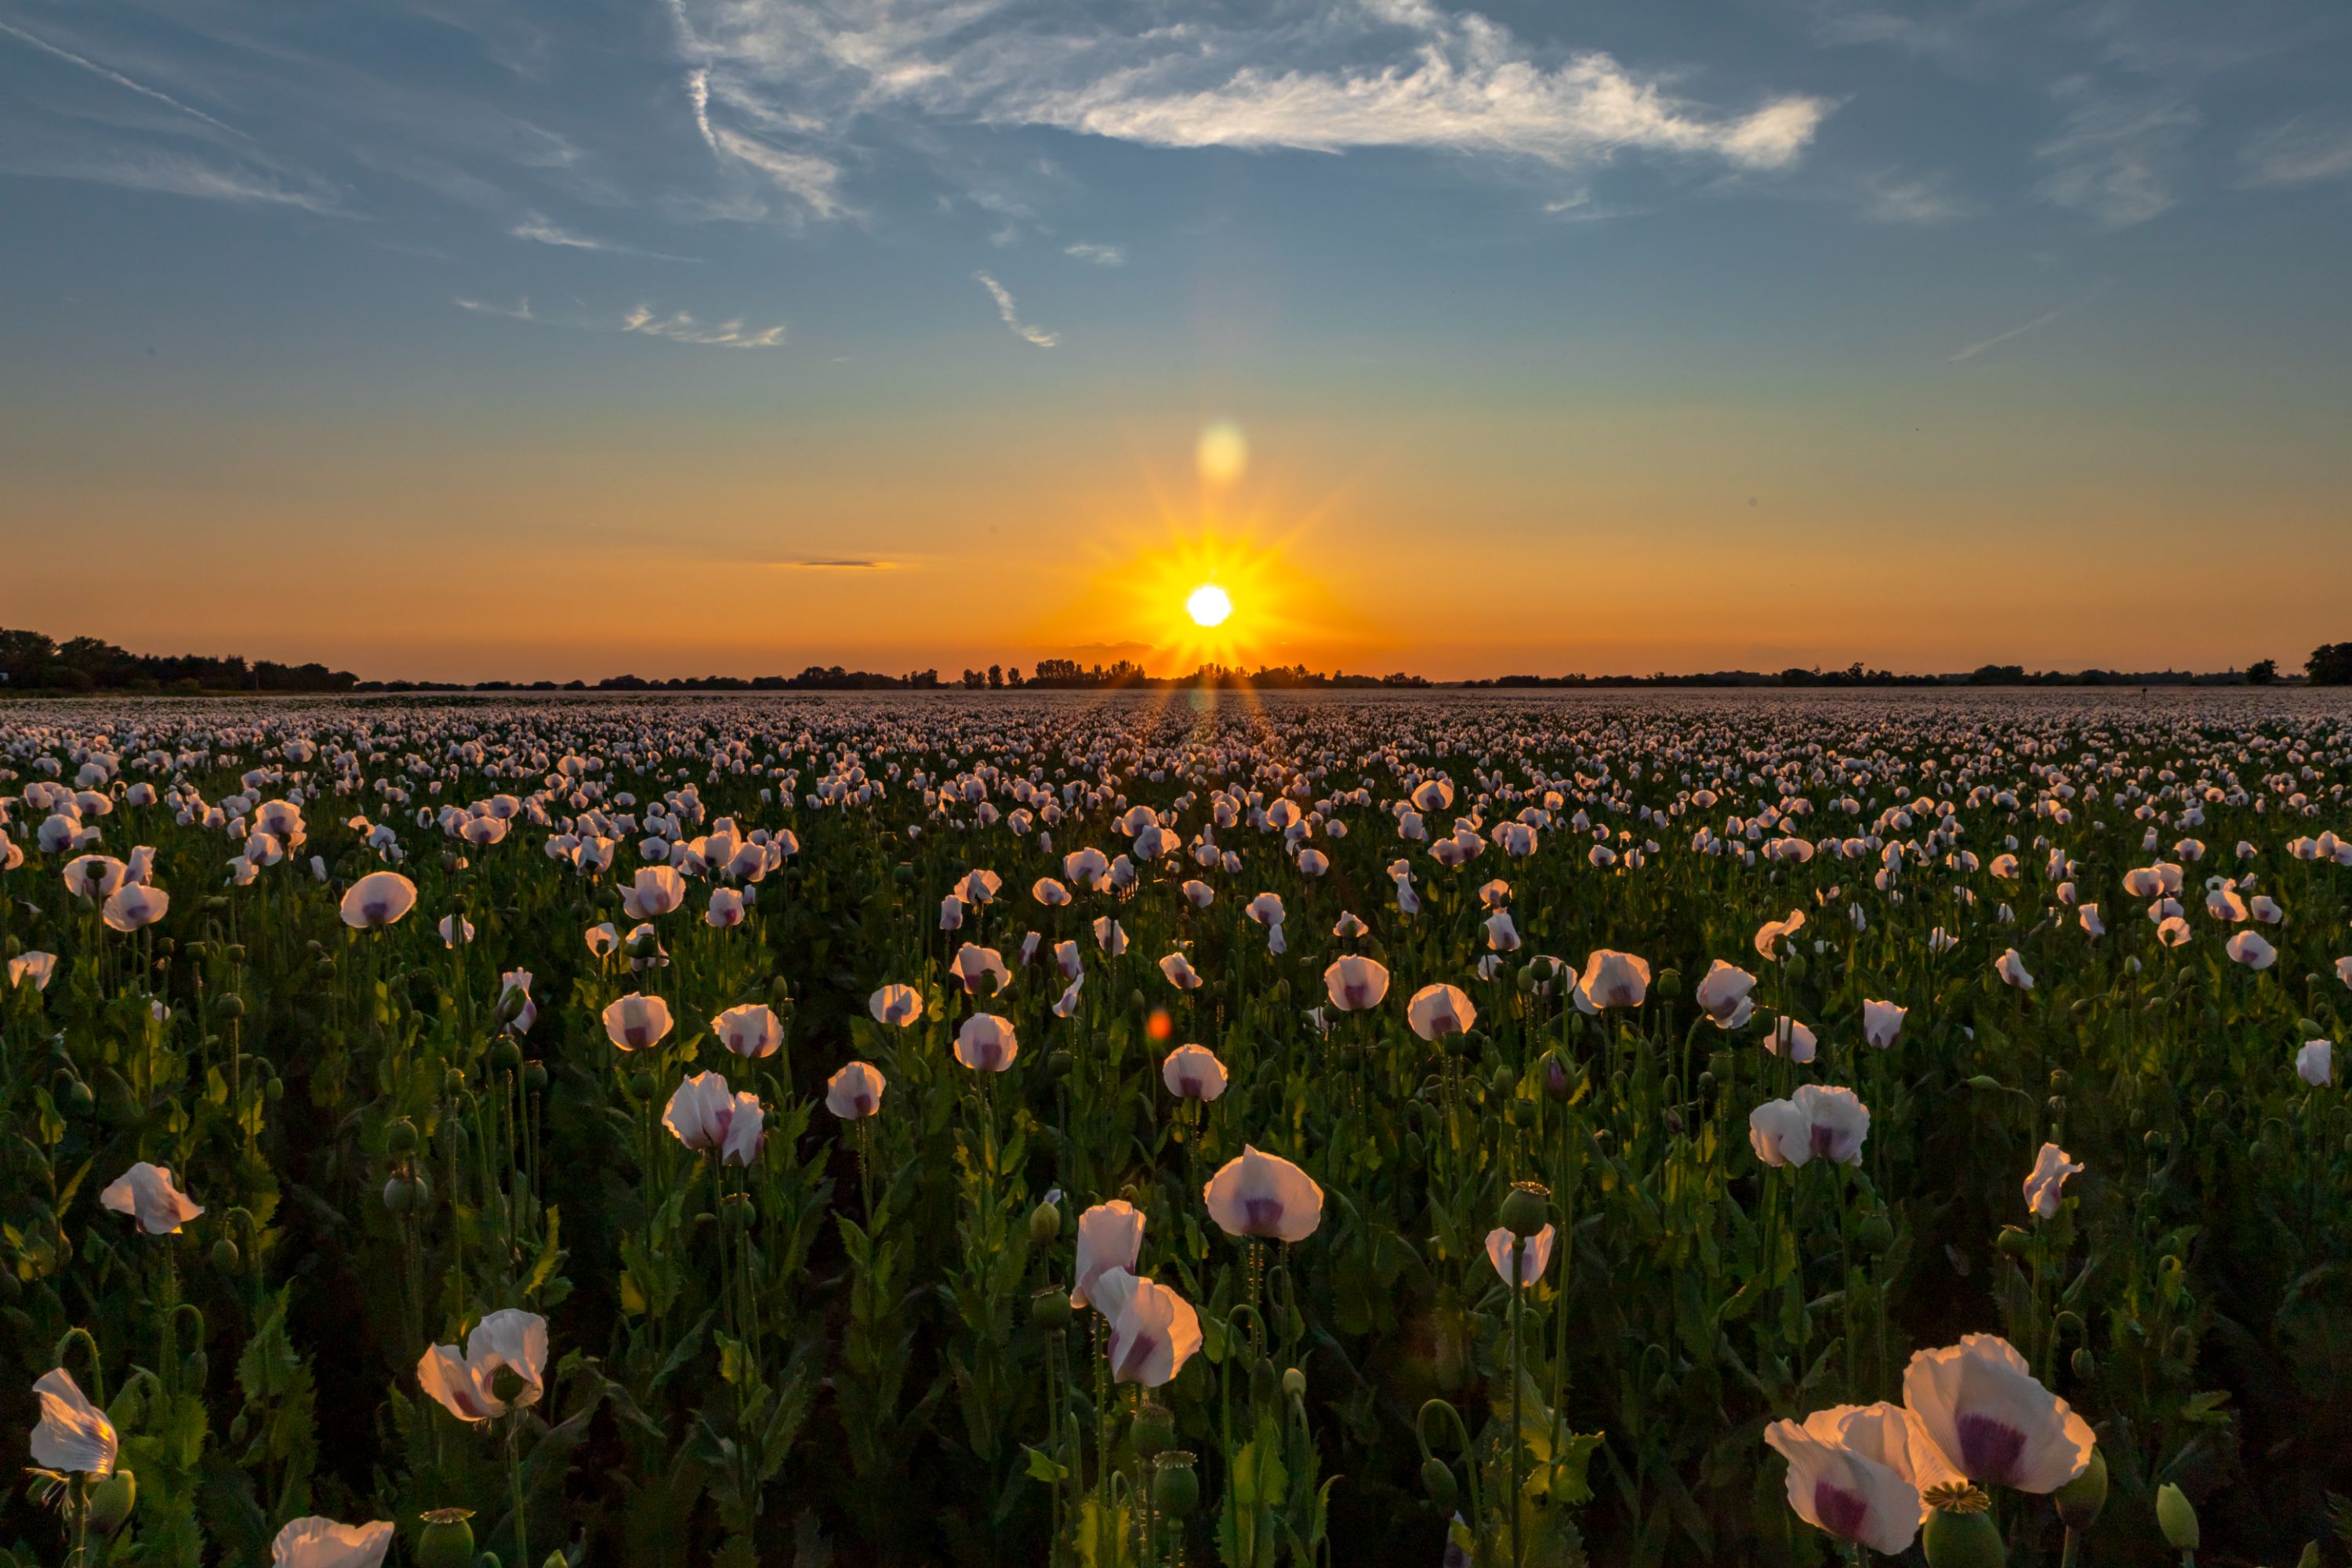 Sunset over the poppy field